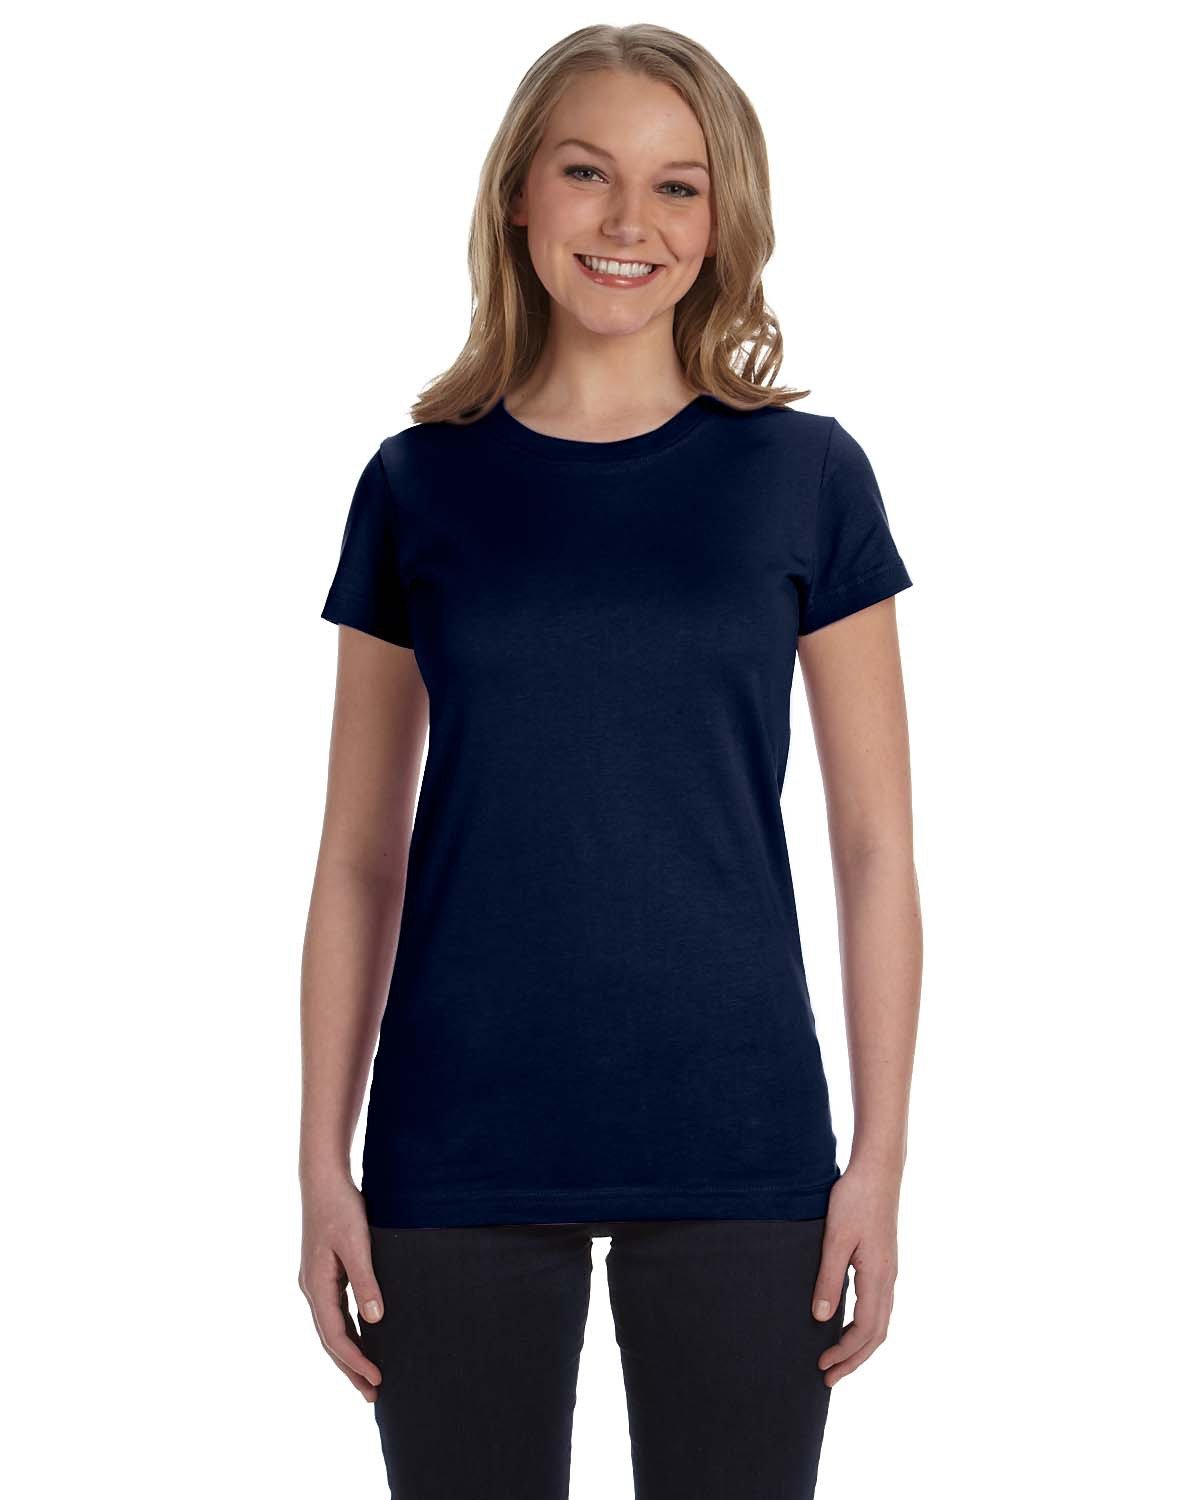 LAT Ladies' Junior Fit T-Shirt navy 